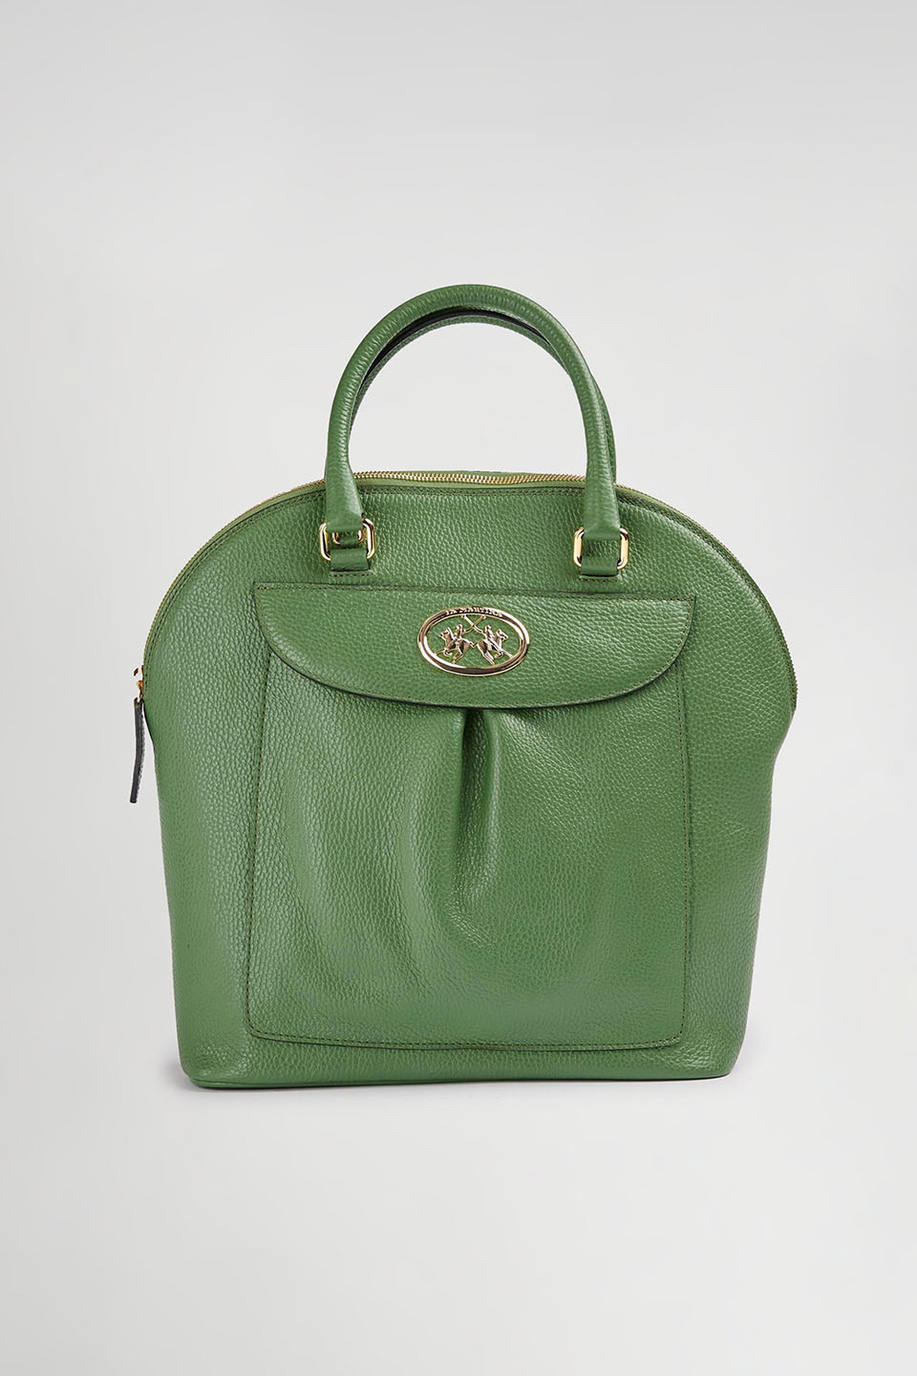 Leather bag - Accessories Woman | La Martina - Official Online Shop